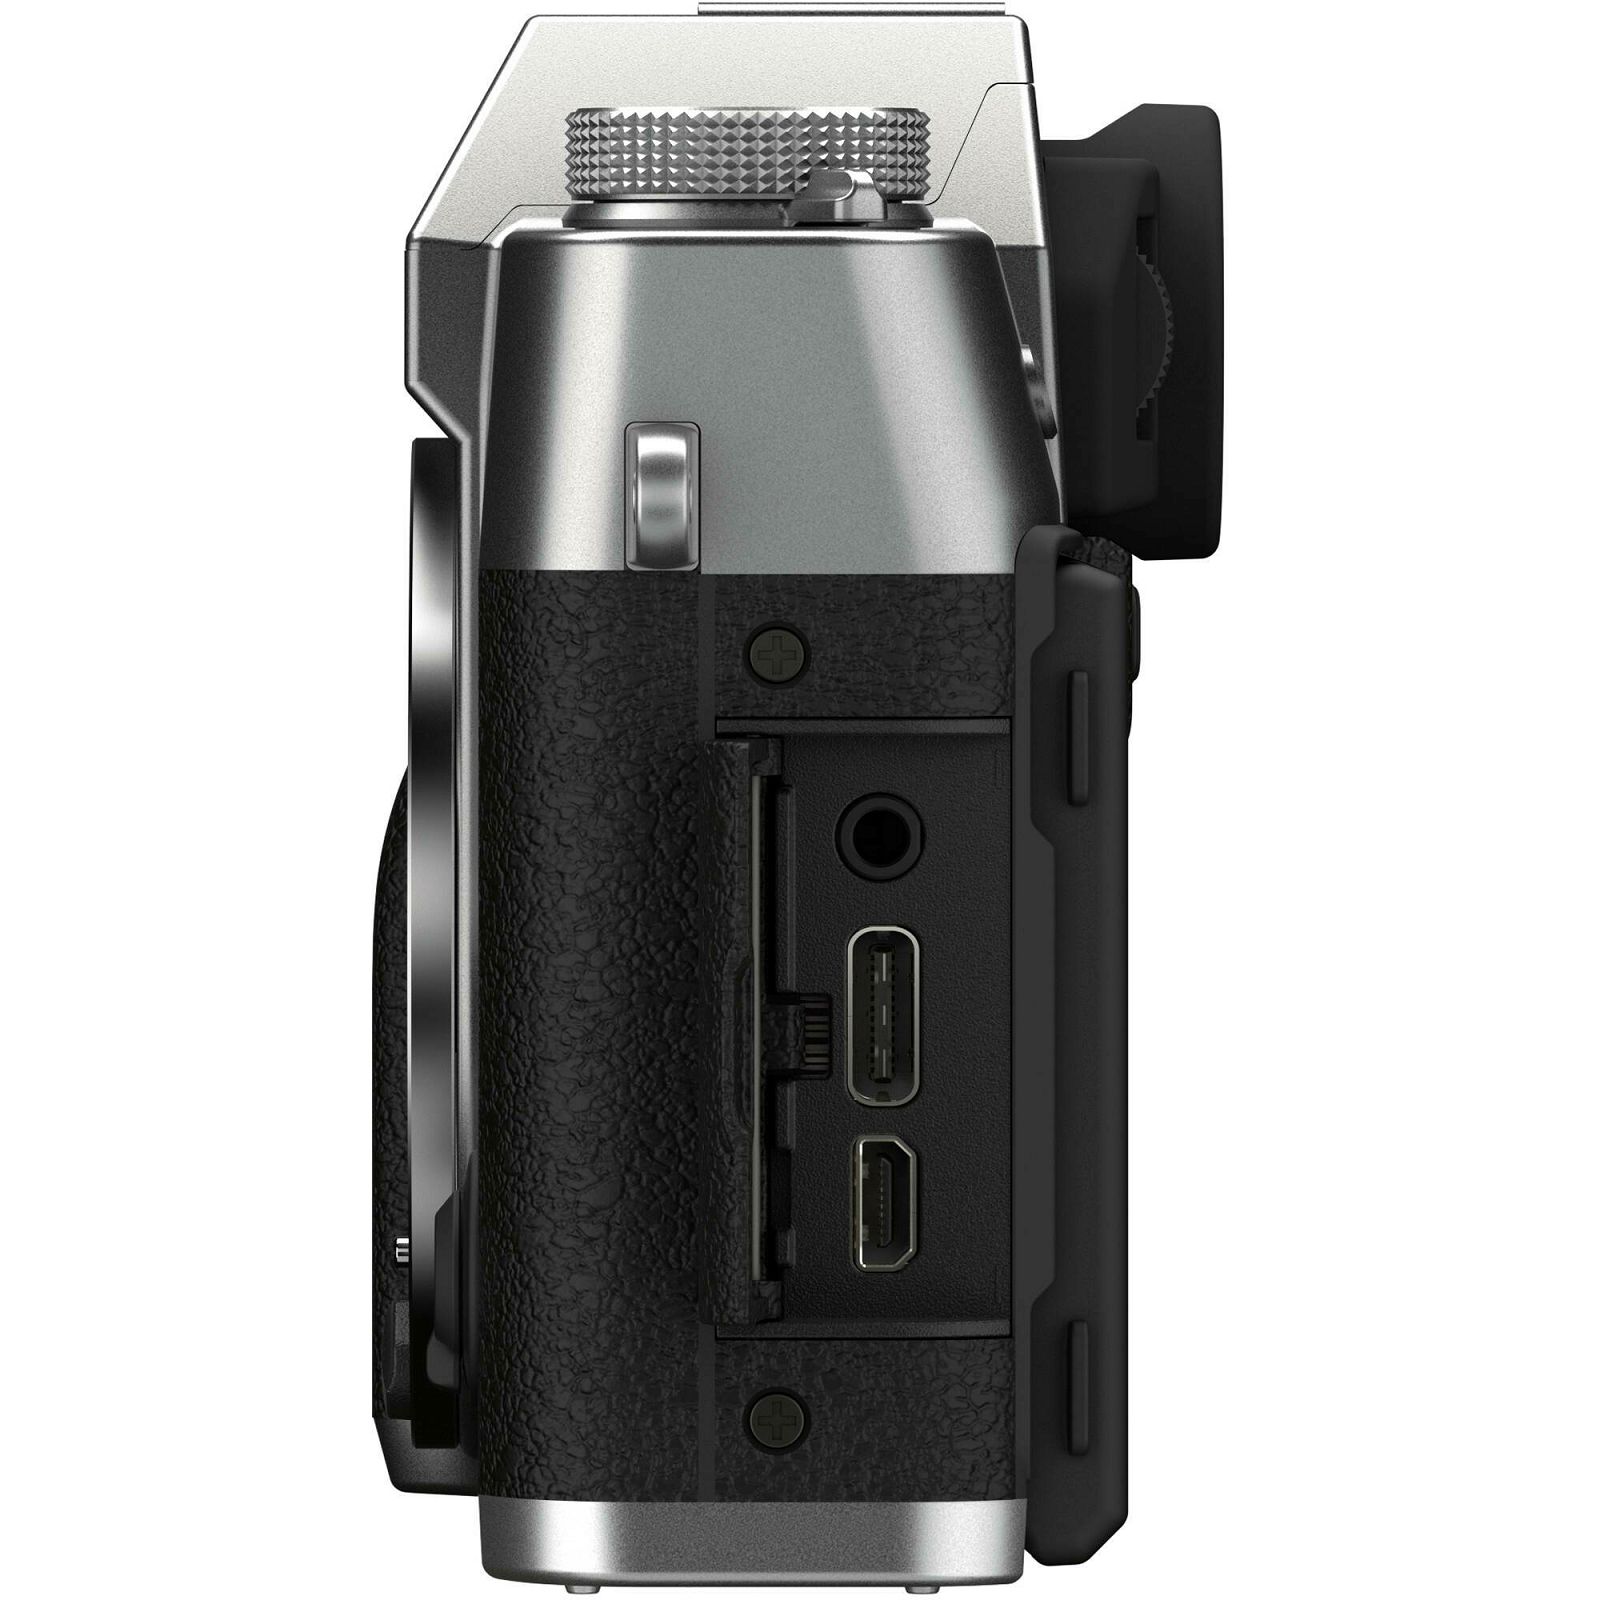 Fujifilm X-T30 II Body Silver srebreni Digitalni fotoaparat Mirrorless camera Fuji Finepix (16759641)